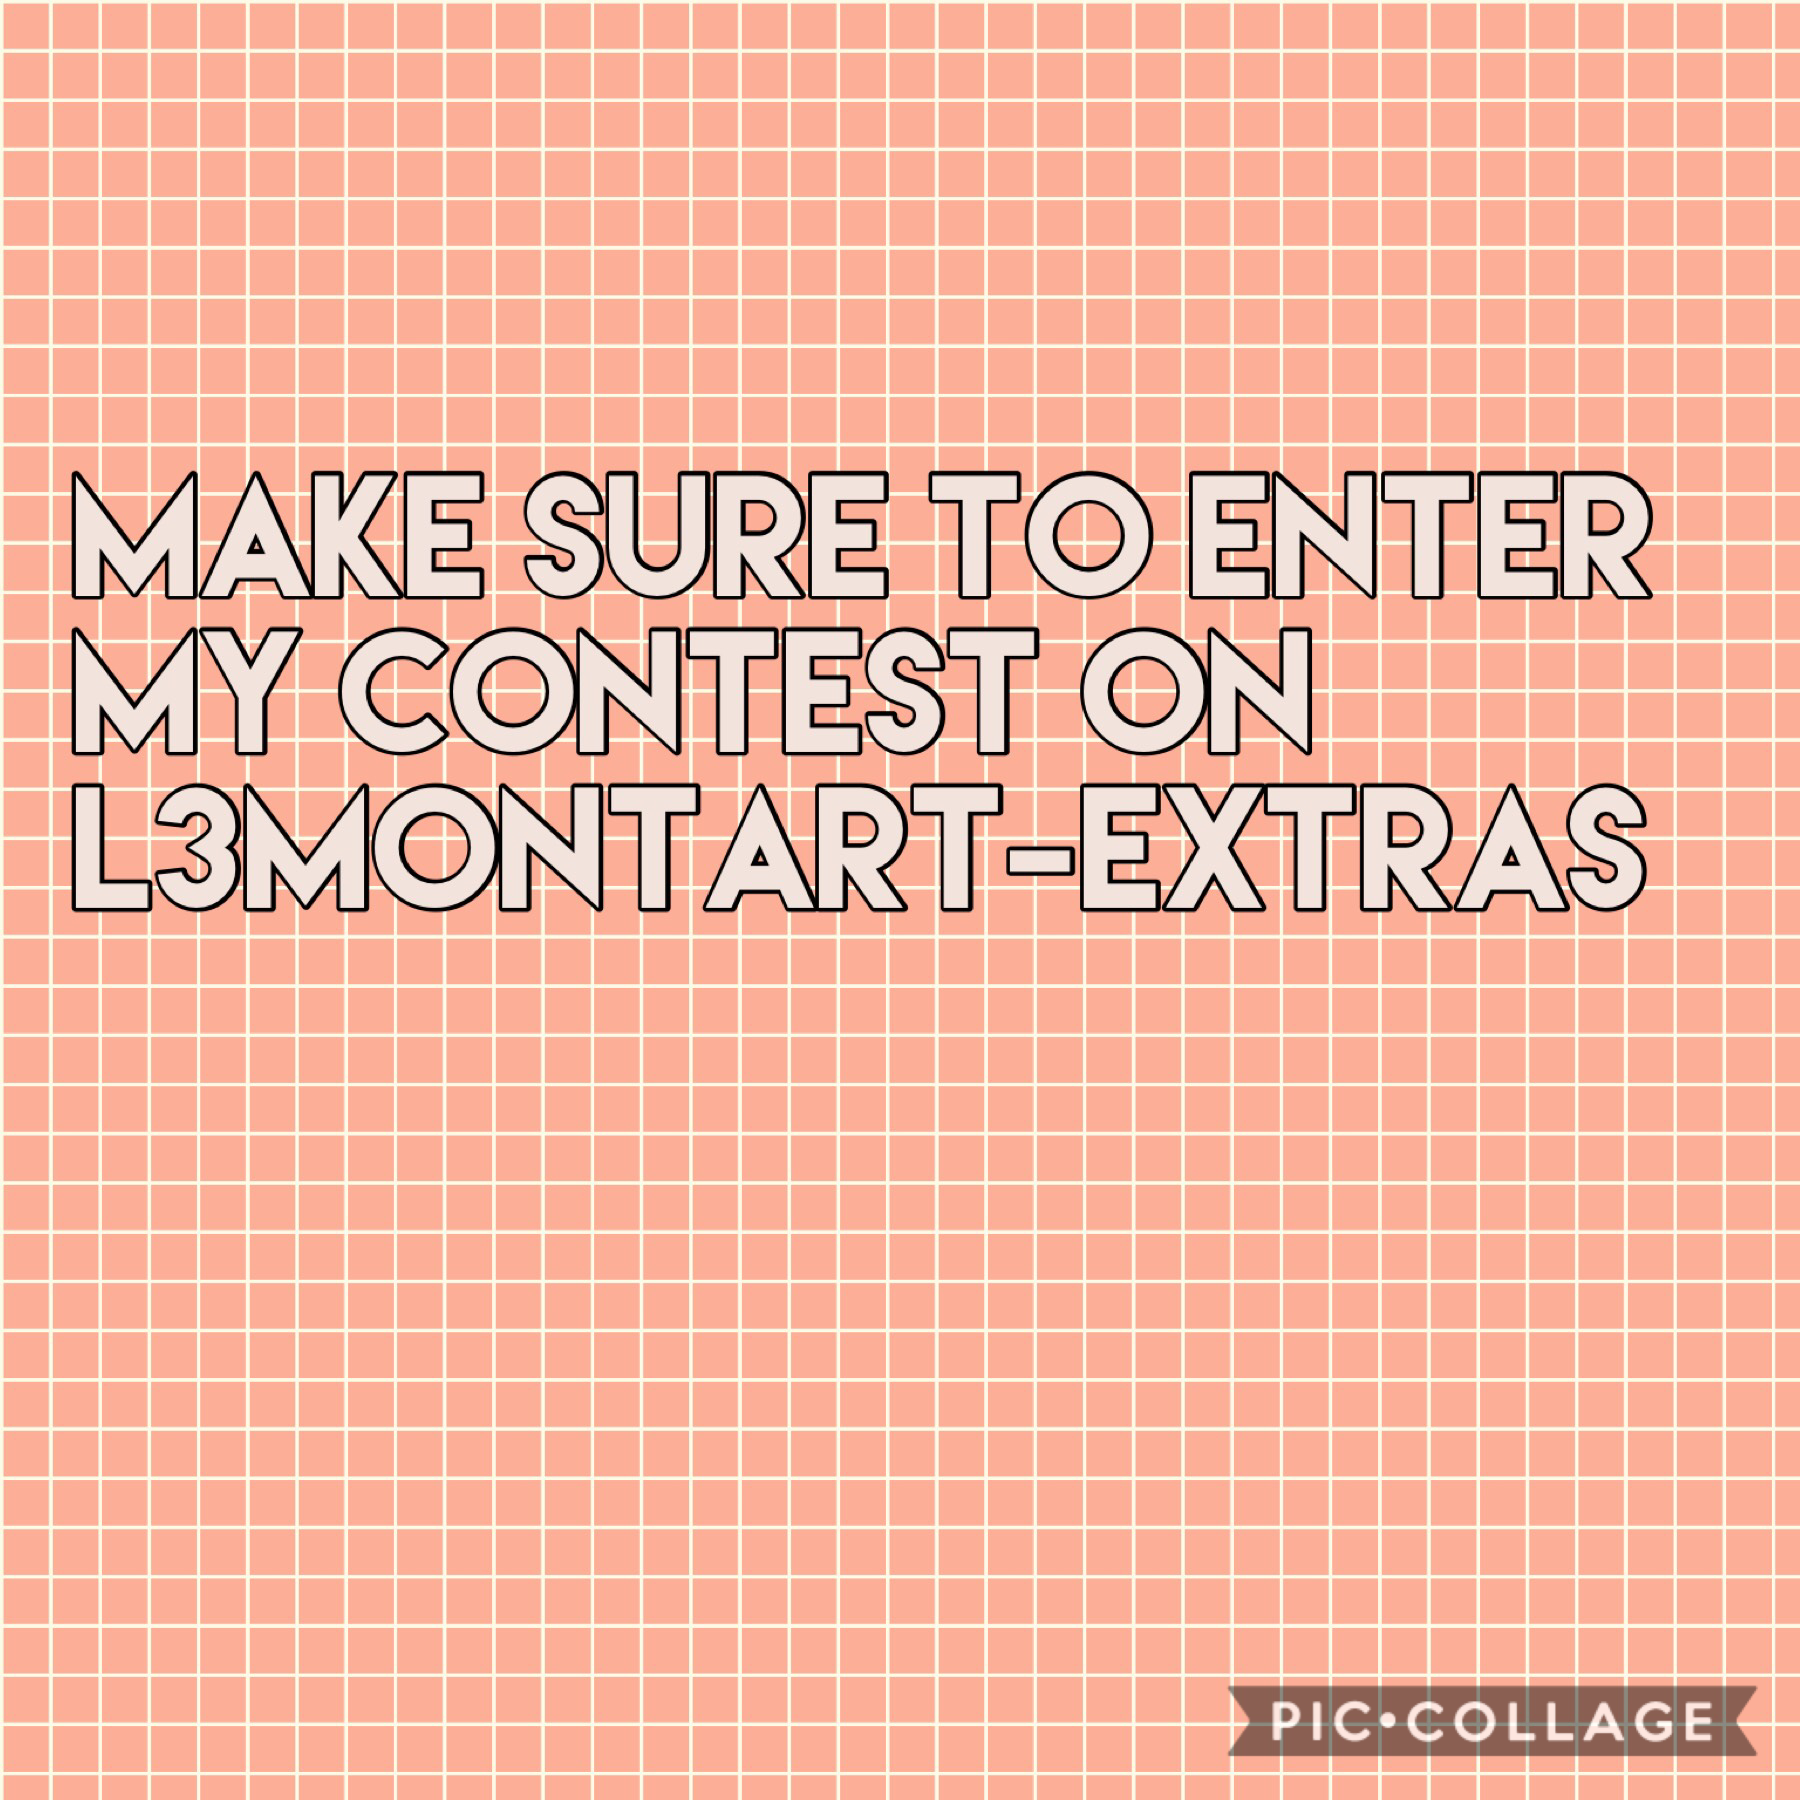 Please enter the contest 